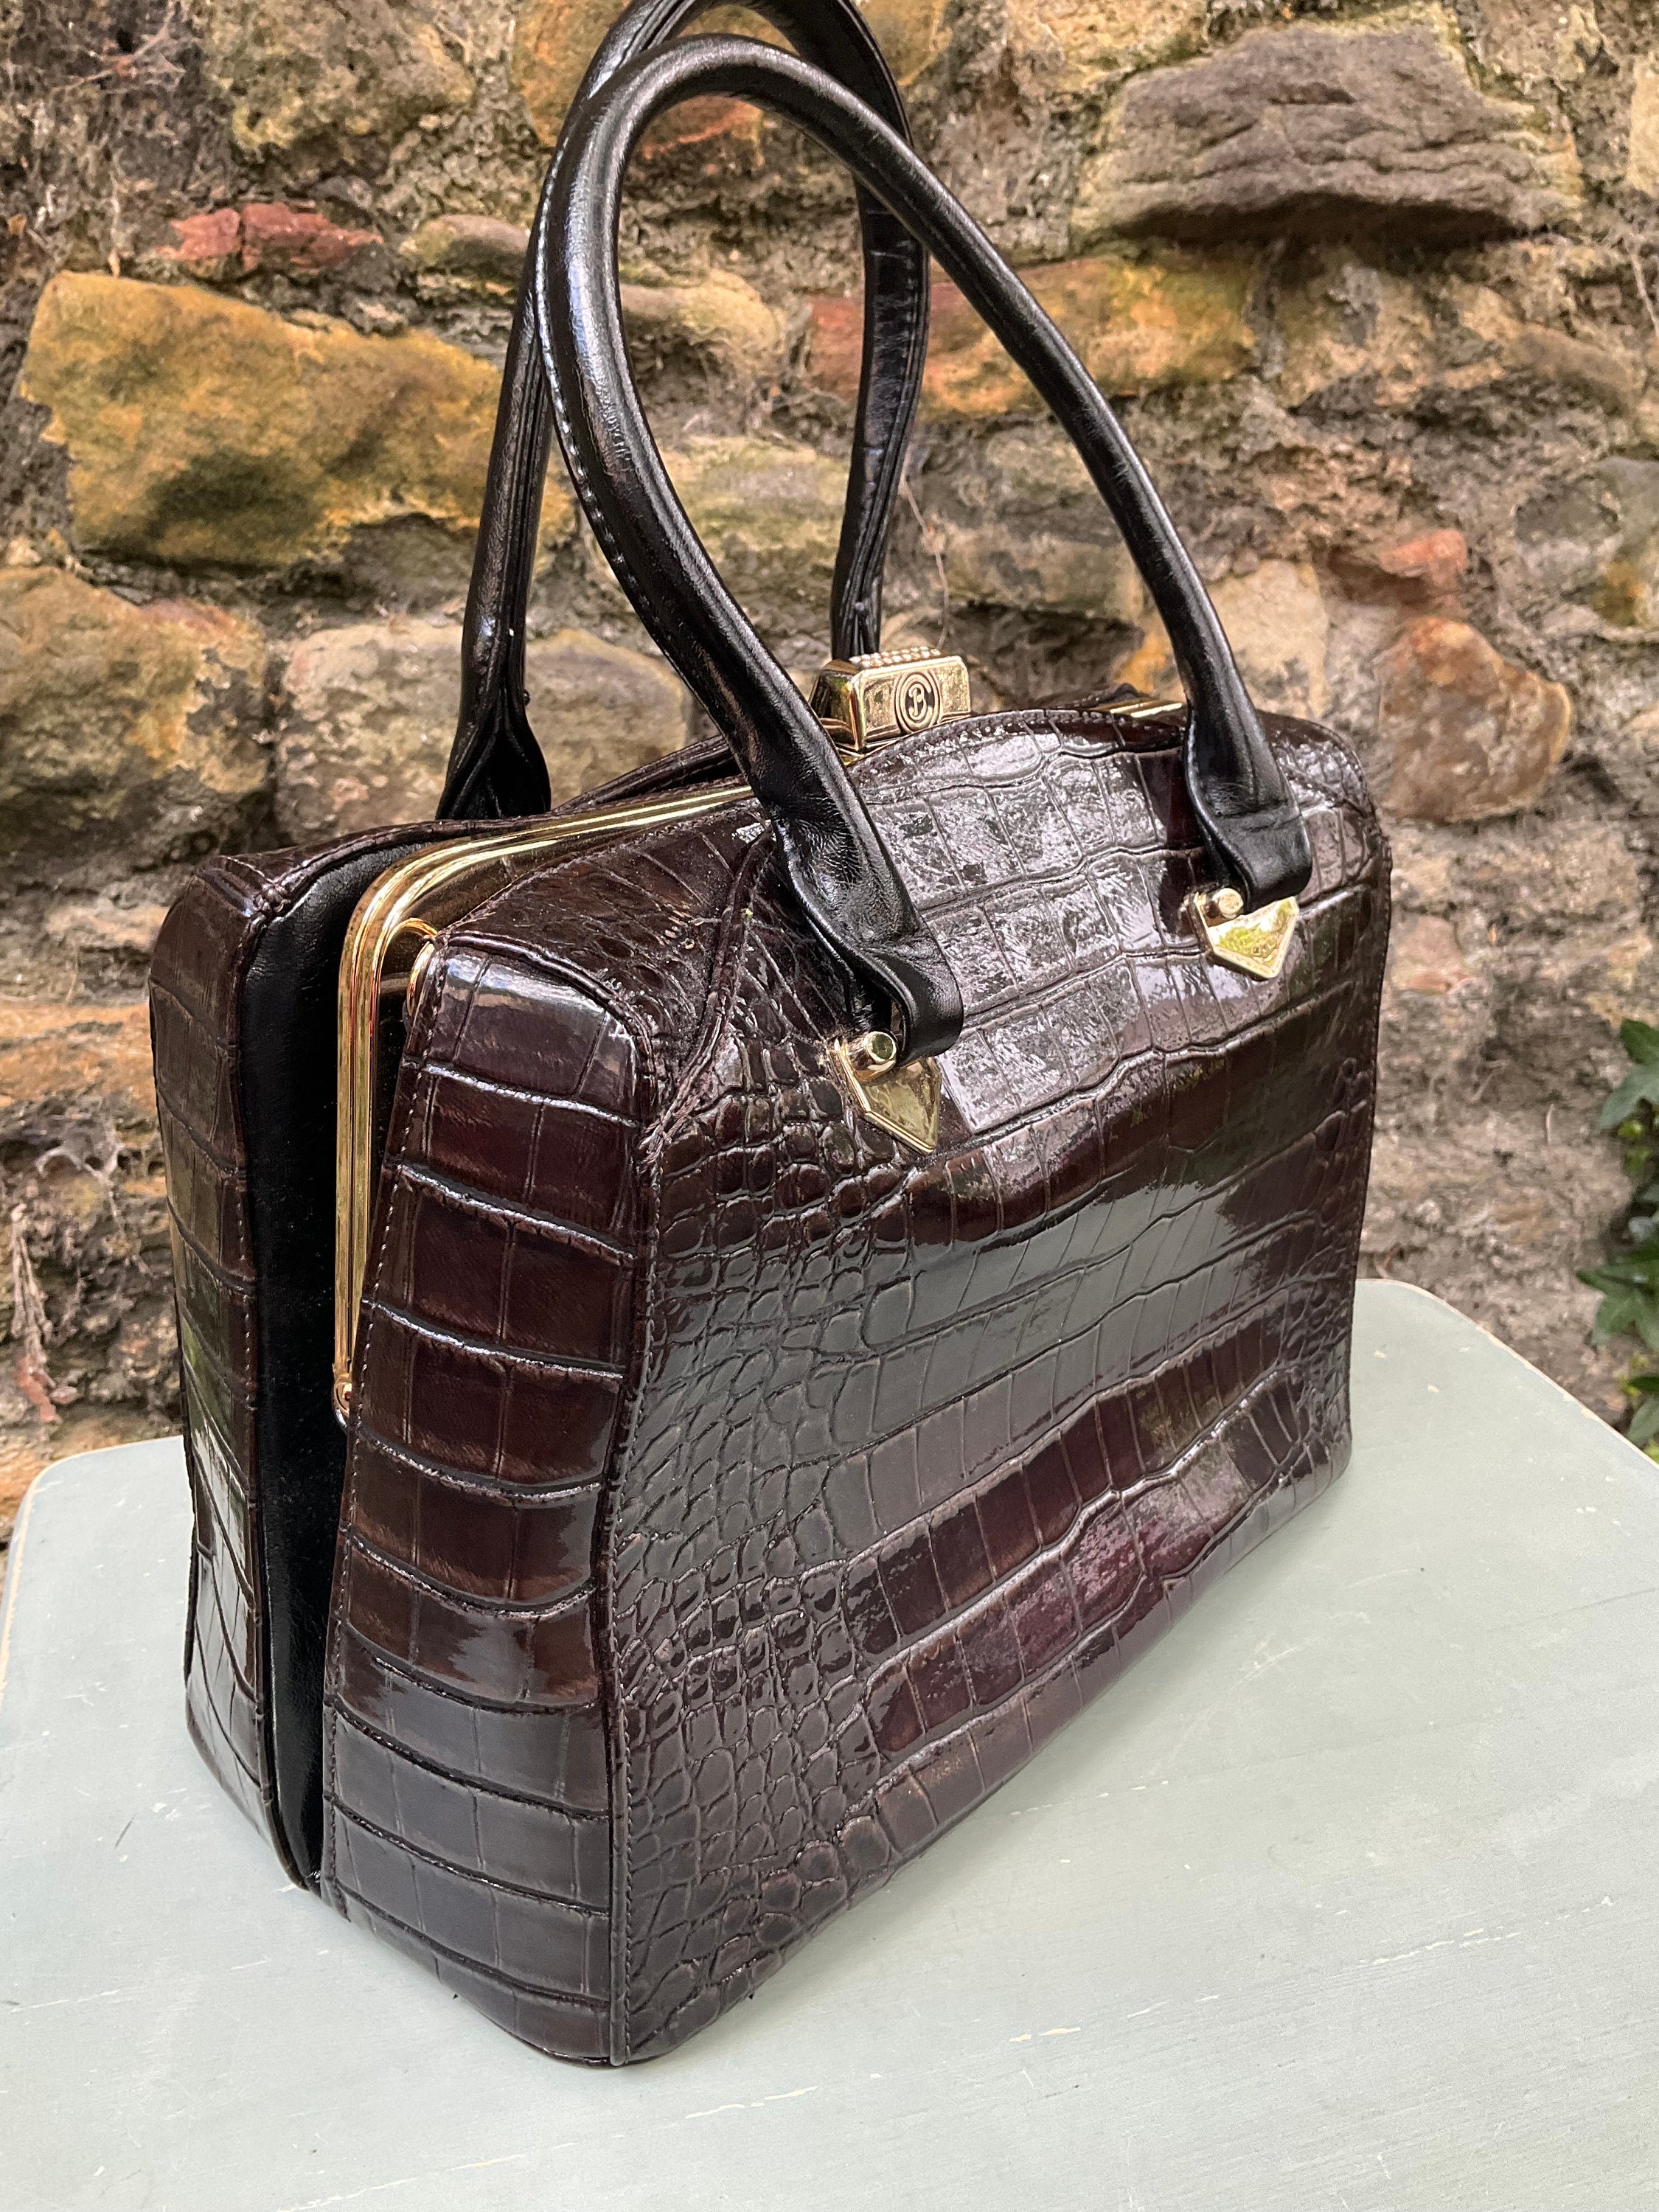 EUC VINTAGE Tre Vero/Dillards Italian Leather Shoulder Bag Taupe Moc Croc  Purse